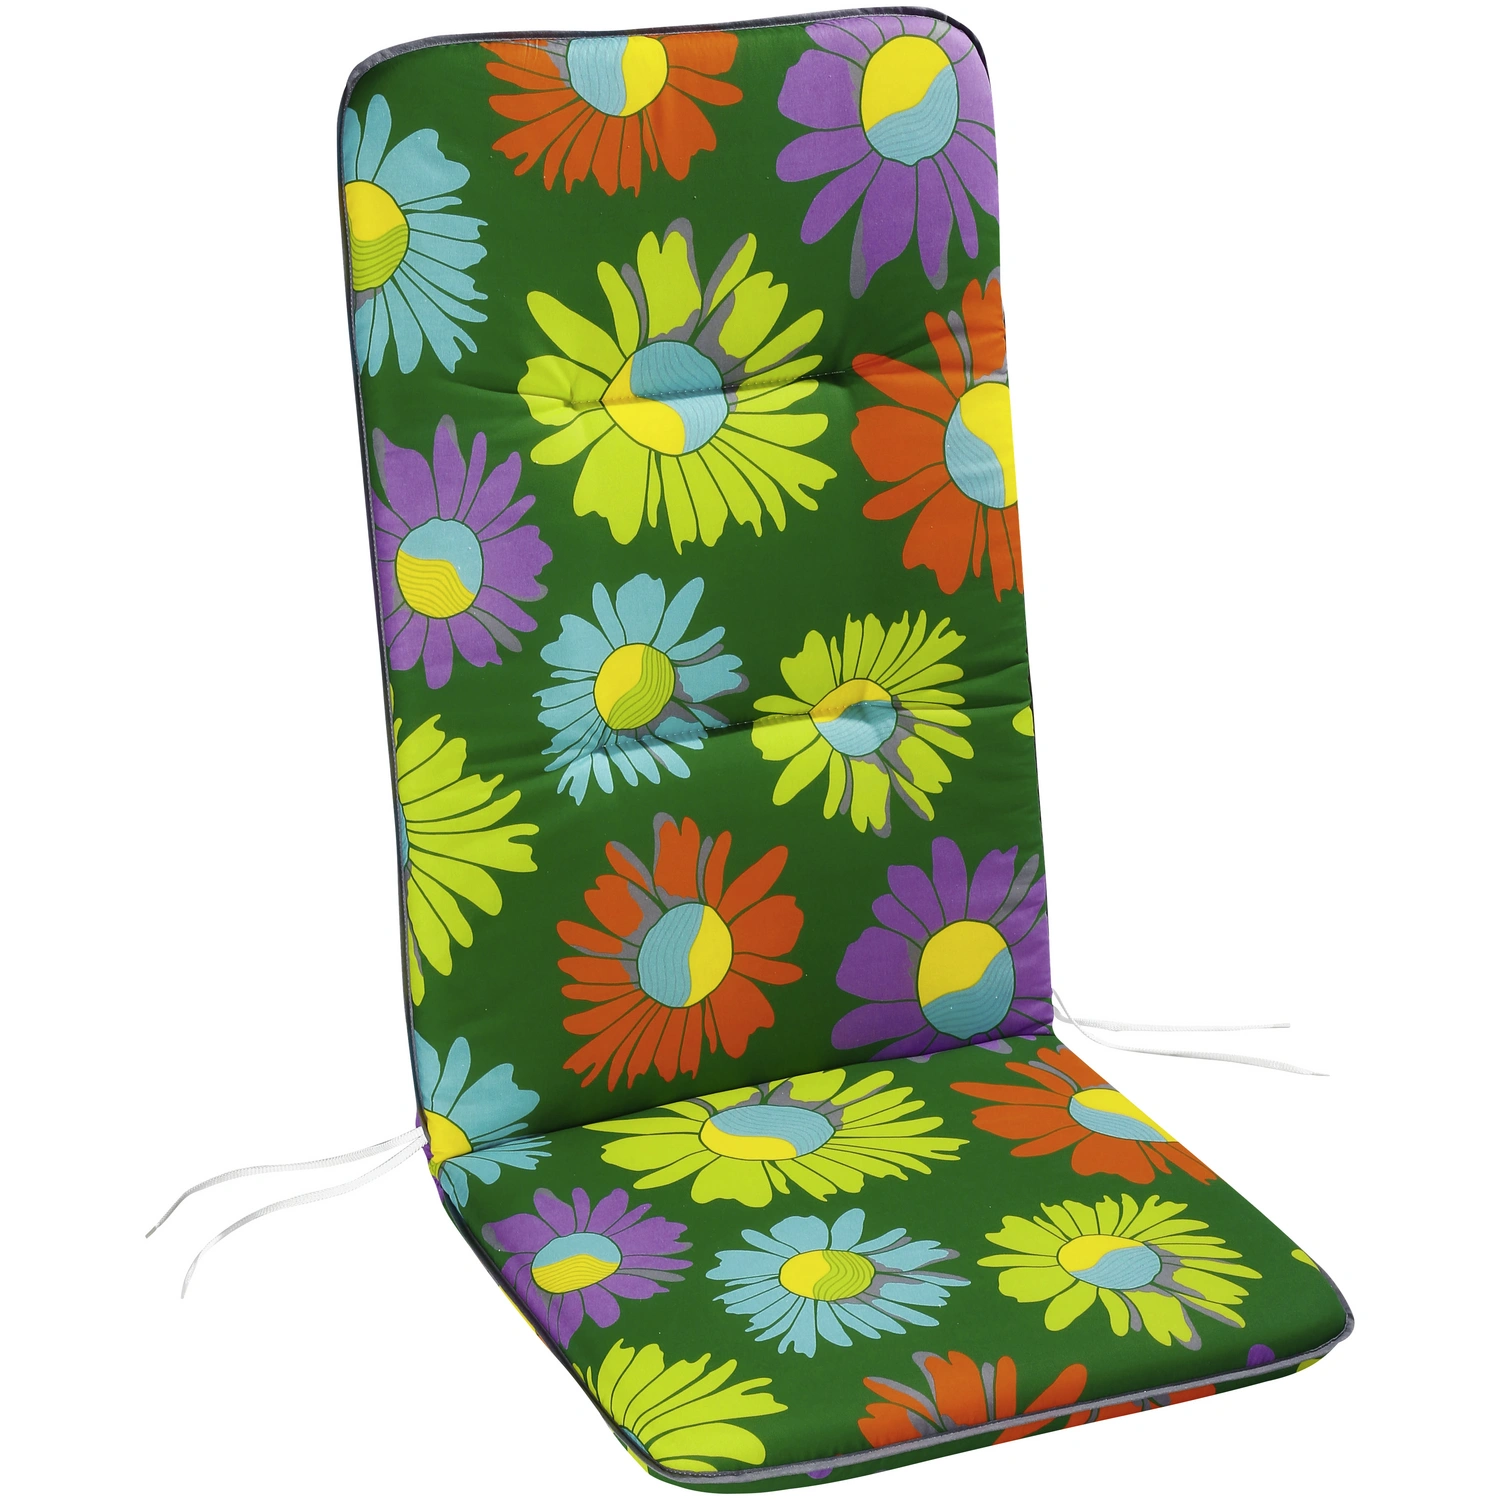 BEST Sesselauflage BxL: Line«, 50 cm x 120 grün/gelb/blau/orange/lila/weiß, »Basic